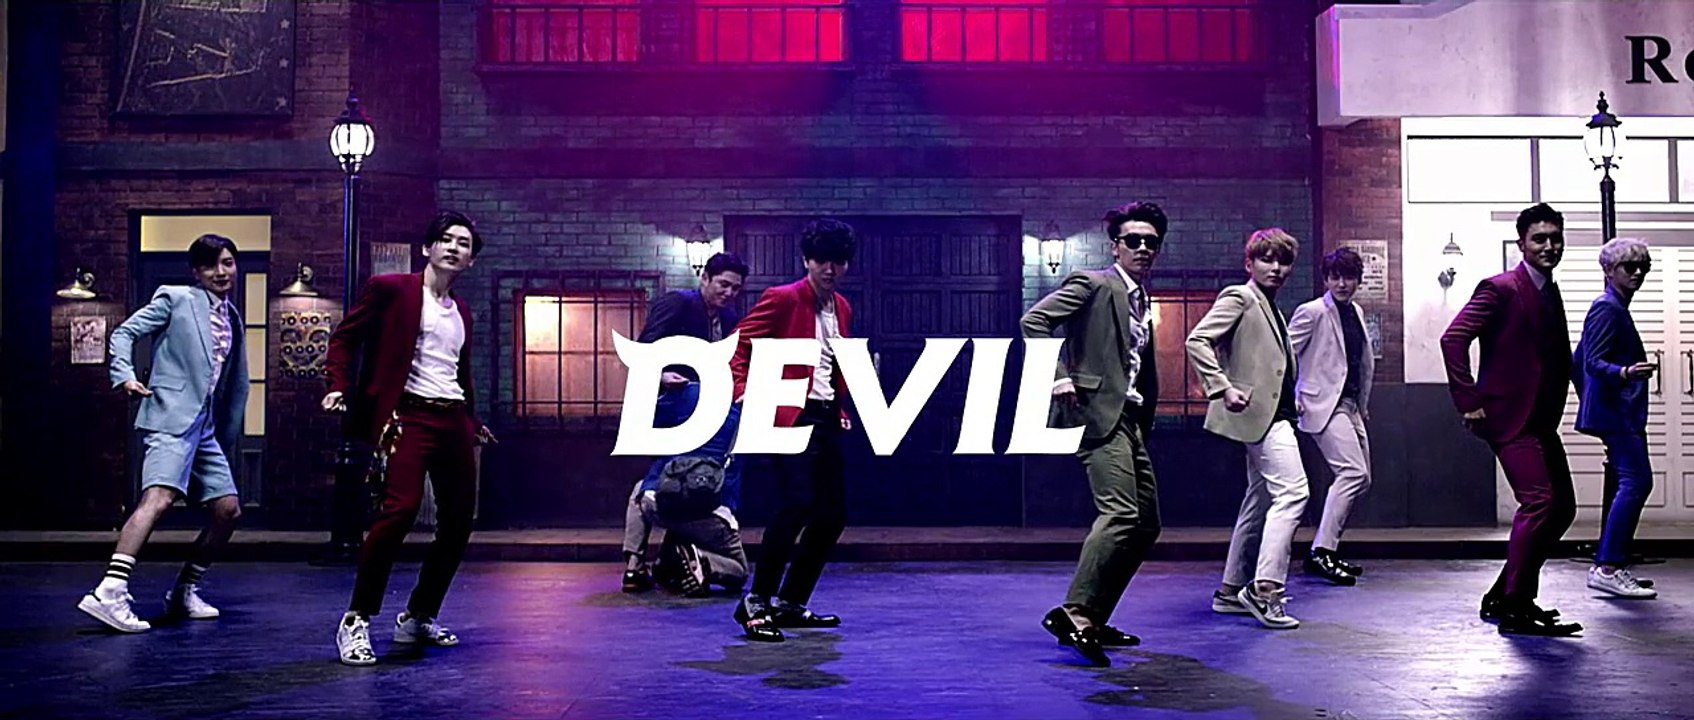 SUPER JUNIOR SPECIAL ALBUM “DEVIL” Official Trailer ver.1